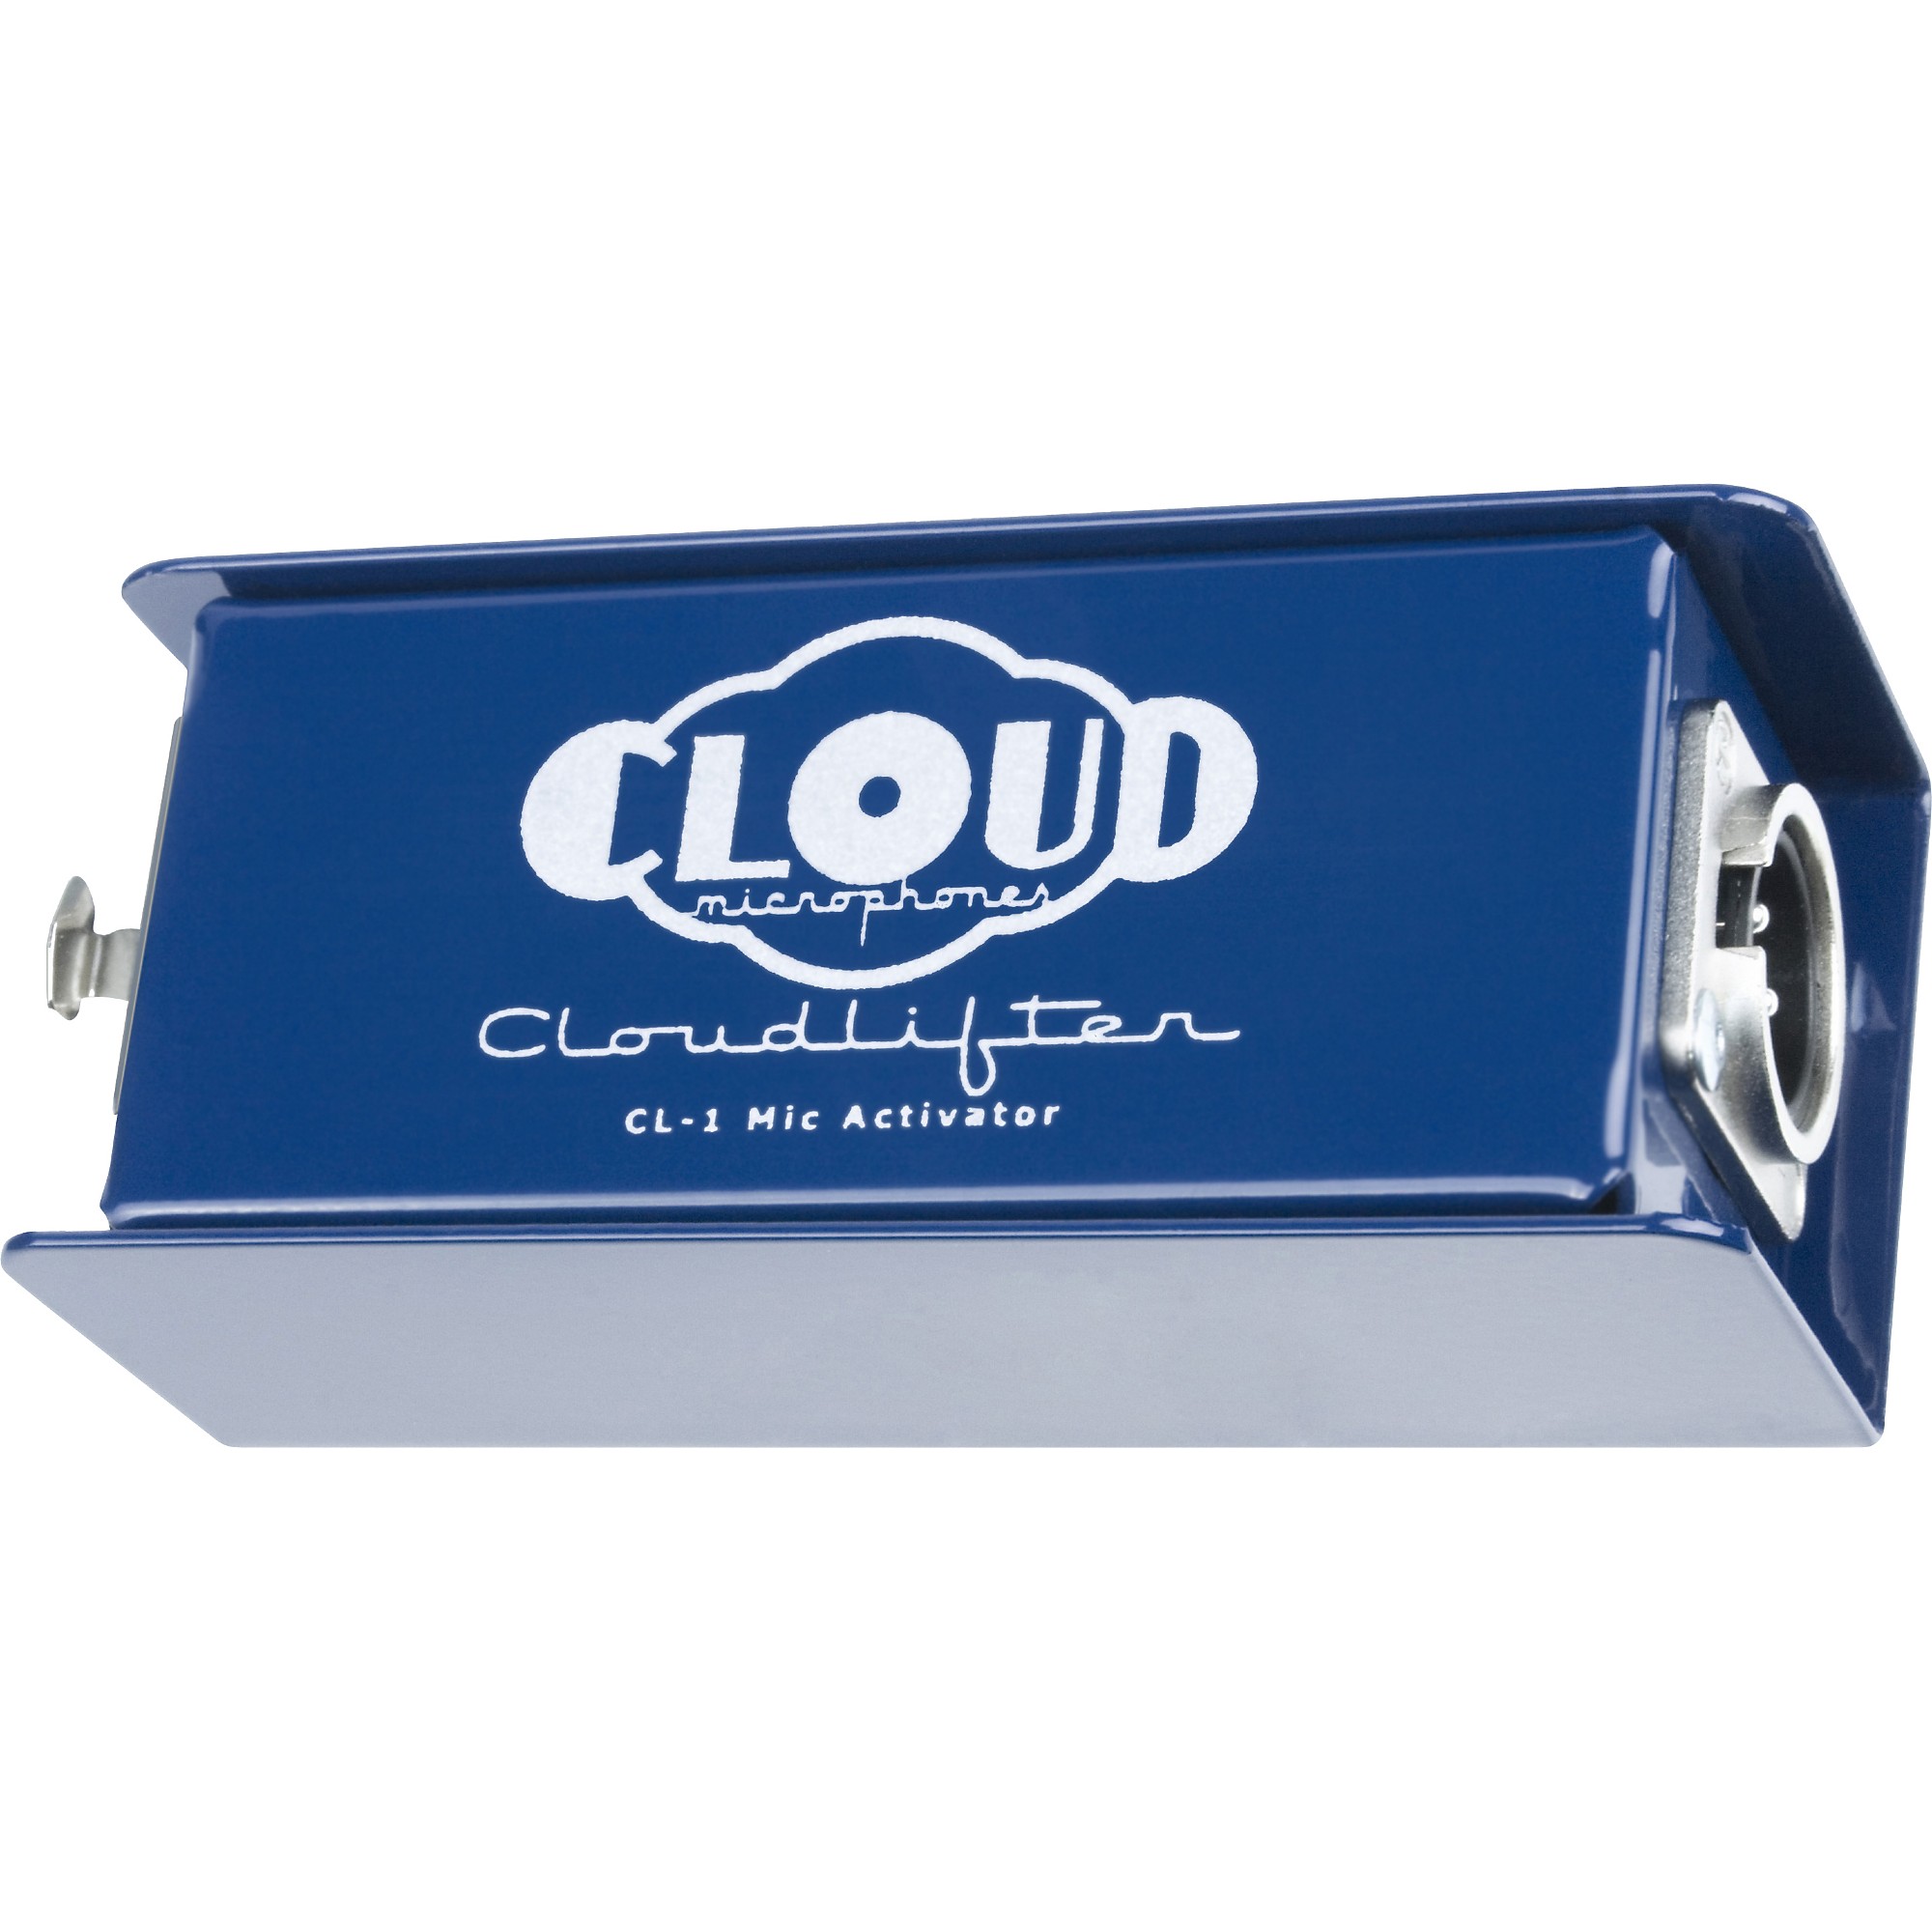 Cloud Cloudlifter CL-1 Mic Activator | Music & Arts